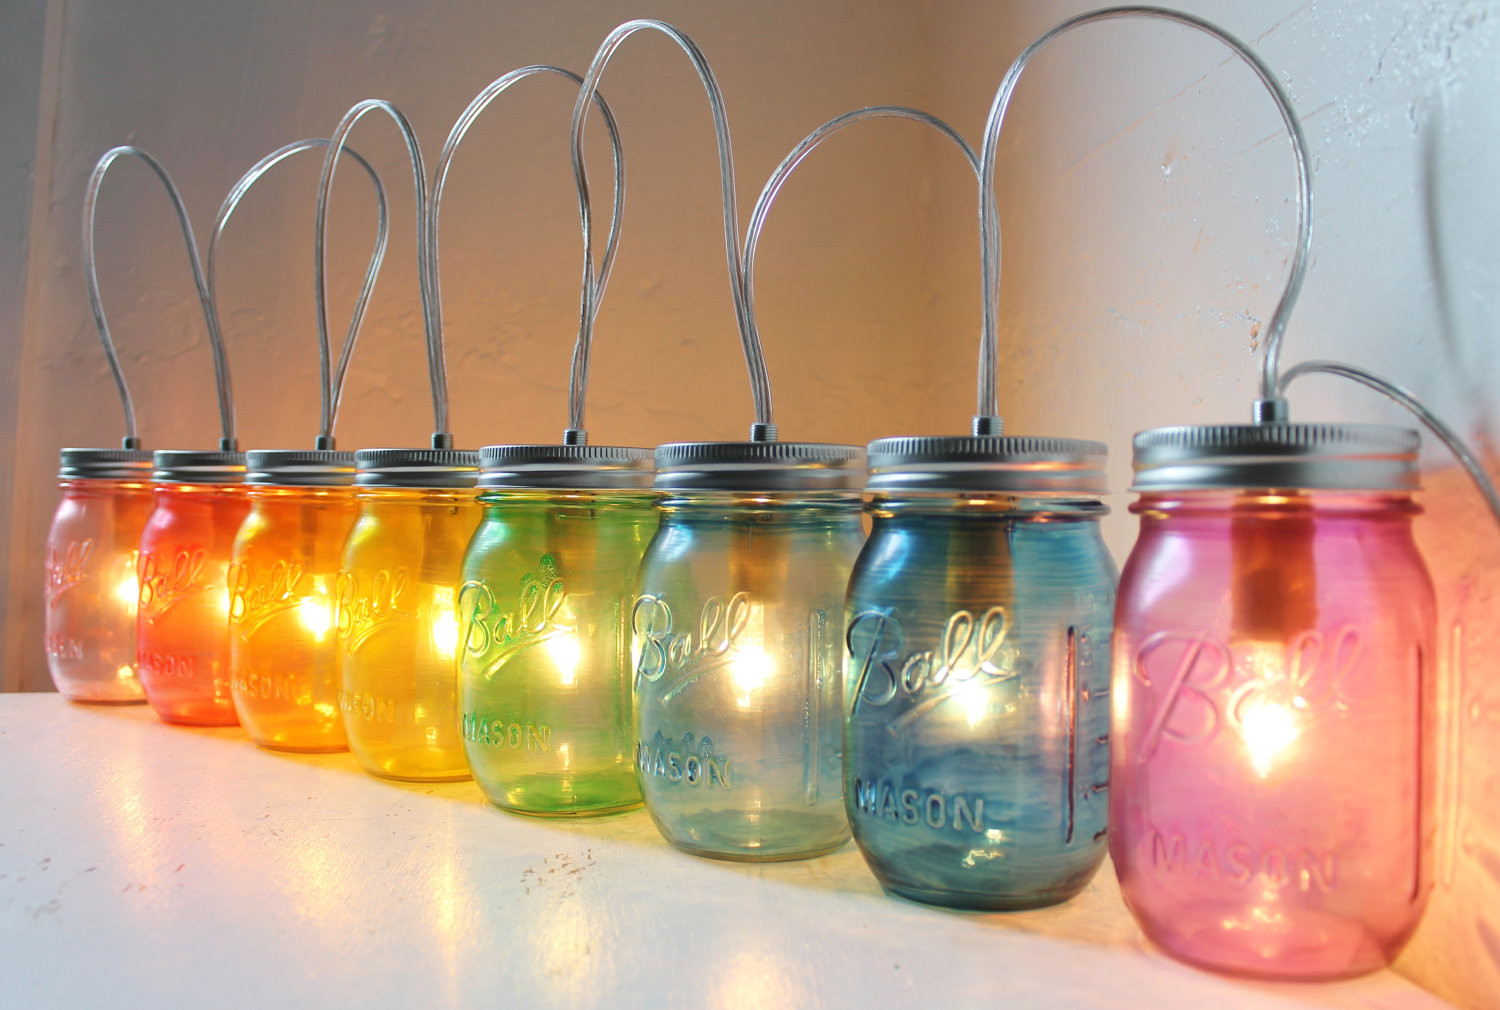 Best ideas about Mason Jar Lights DIY
. Save or Pin 20 DIY Mason Jar Lighting Ideas Now.